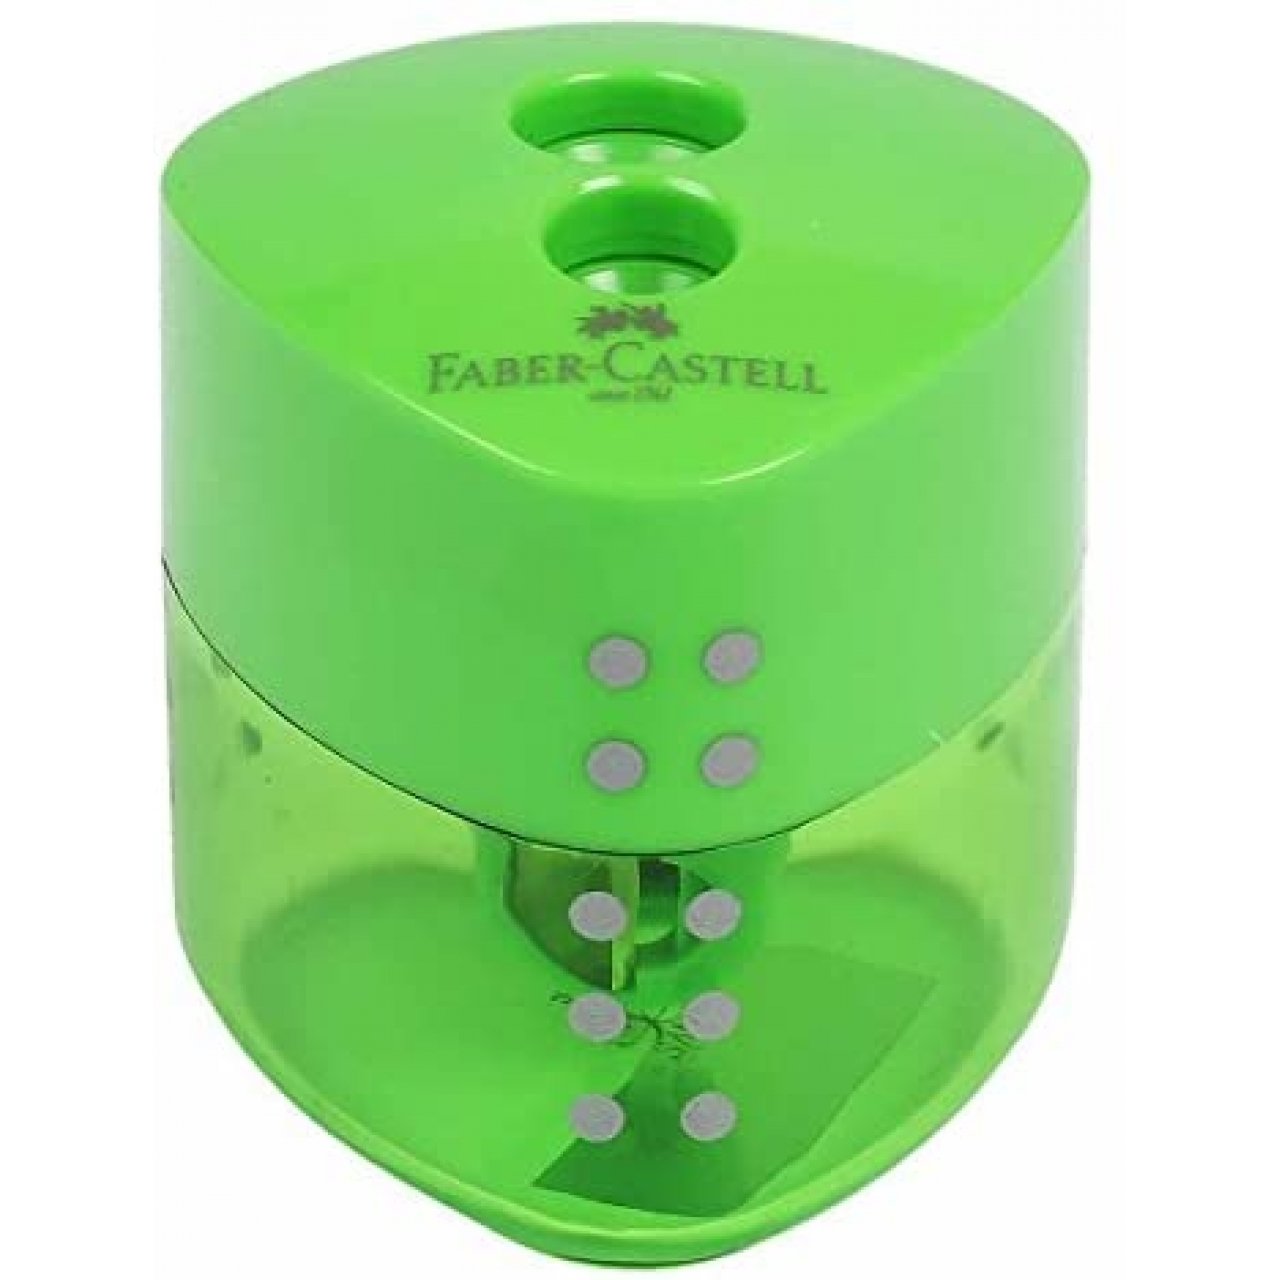 Faber Castell Grip Auto Jumbo Canlı Renkler Kalemtraş